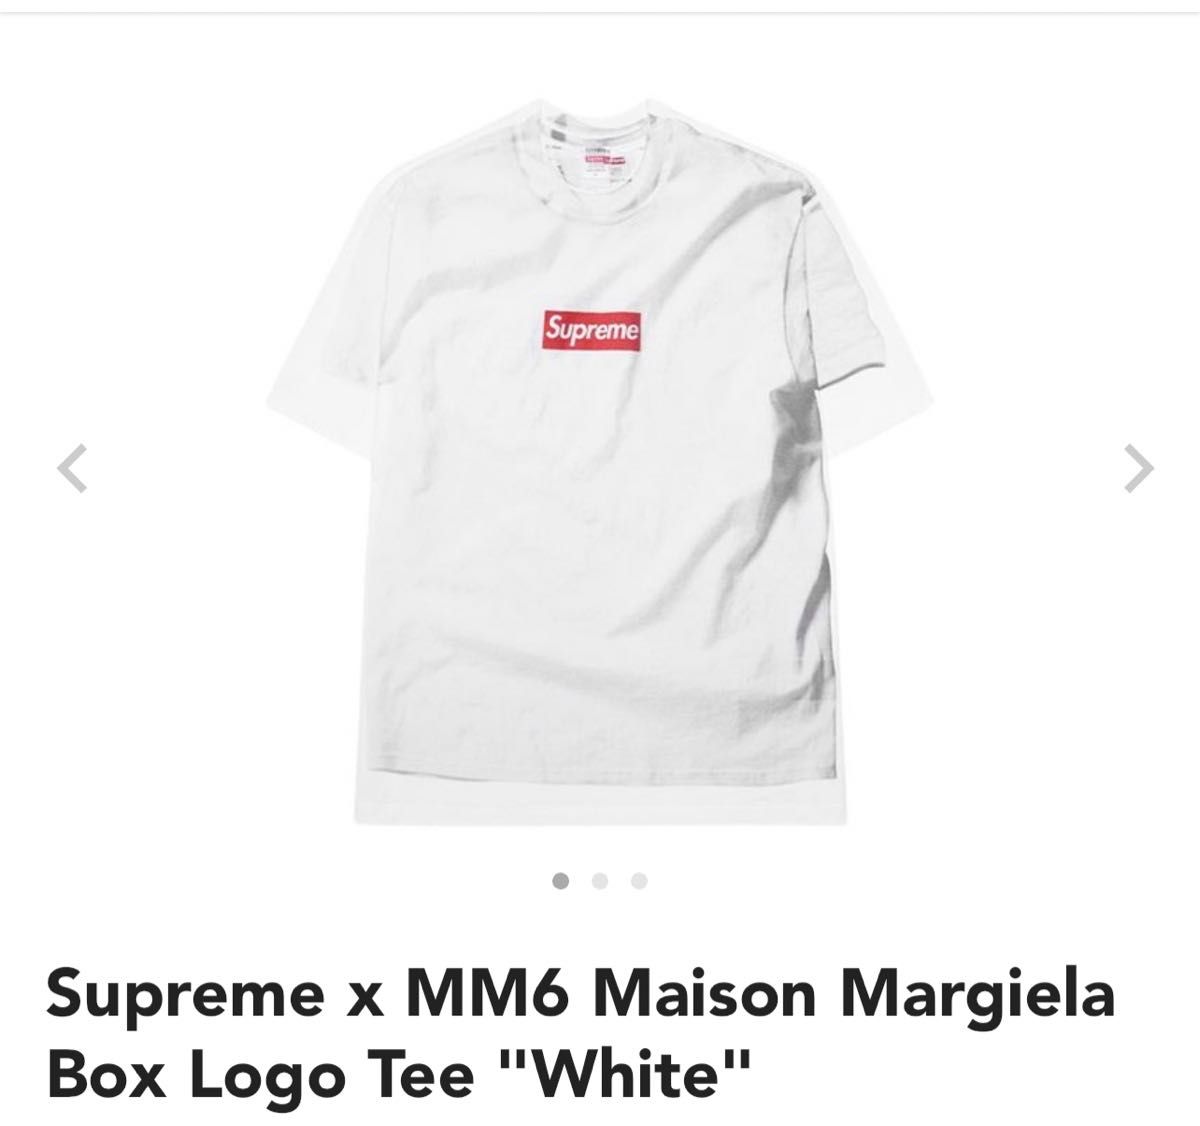 Supreme x MM6 Maison Margiela Box Logo Tee